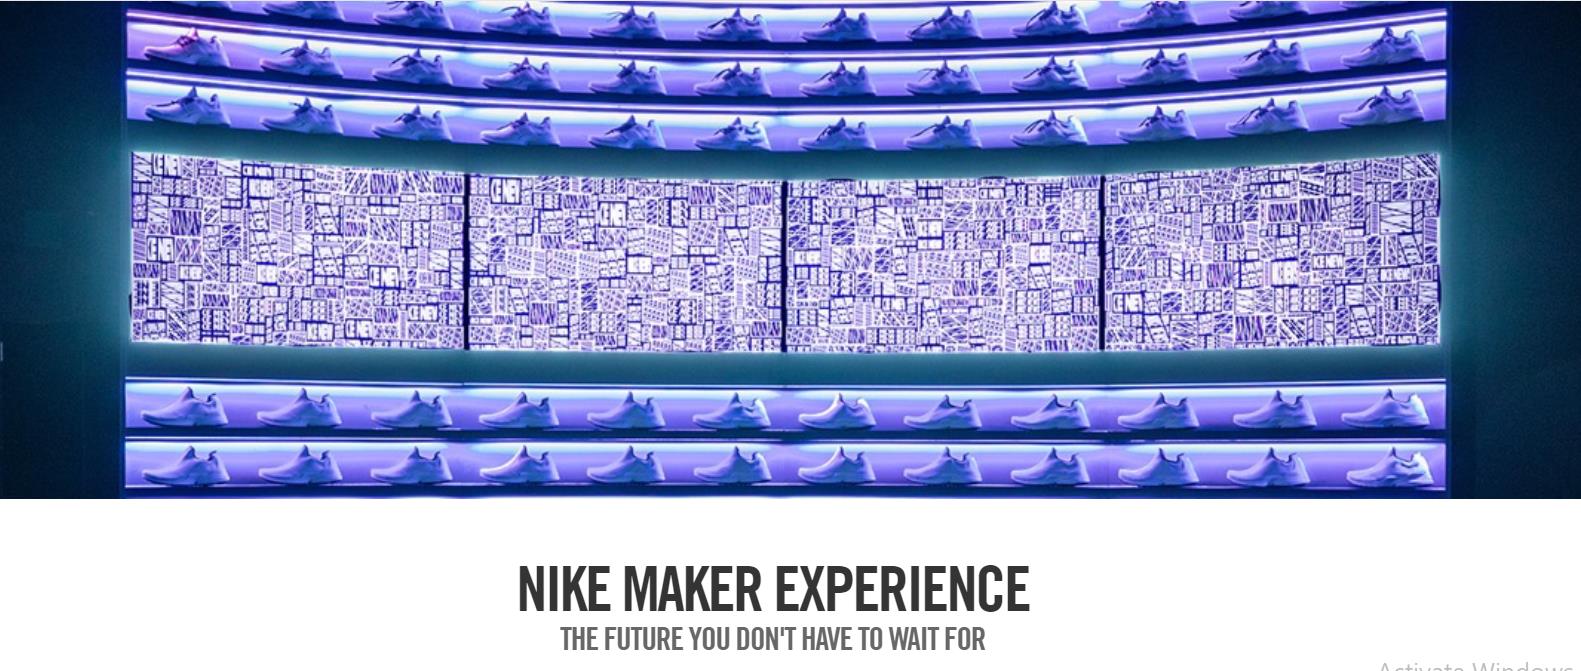 Nike Maker Experience is a new-generation customization program based on AI data